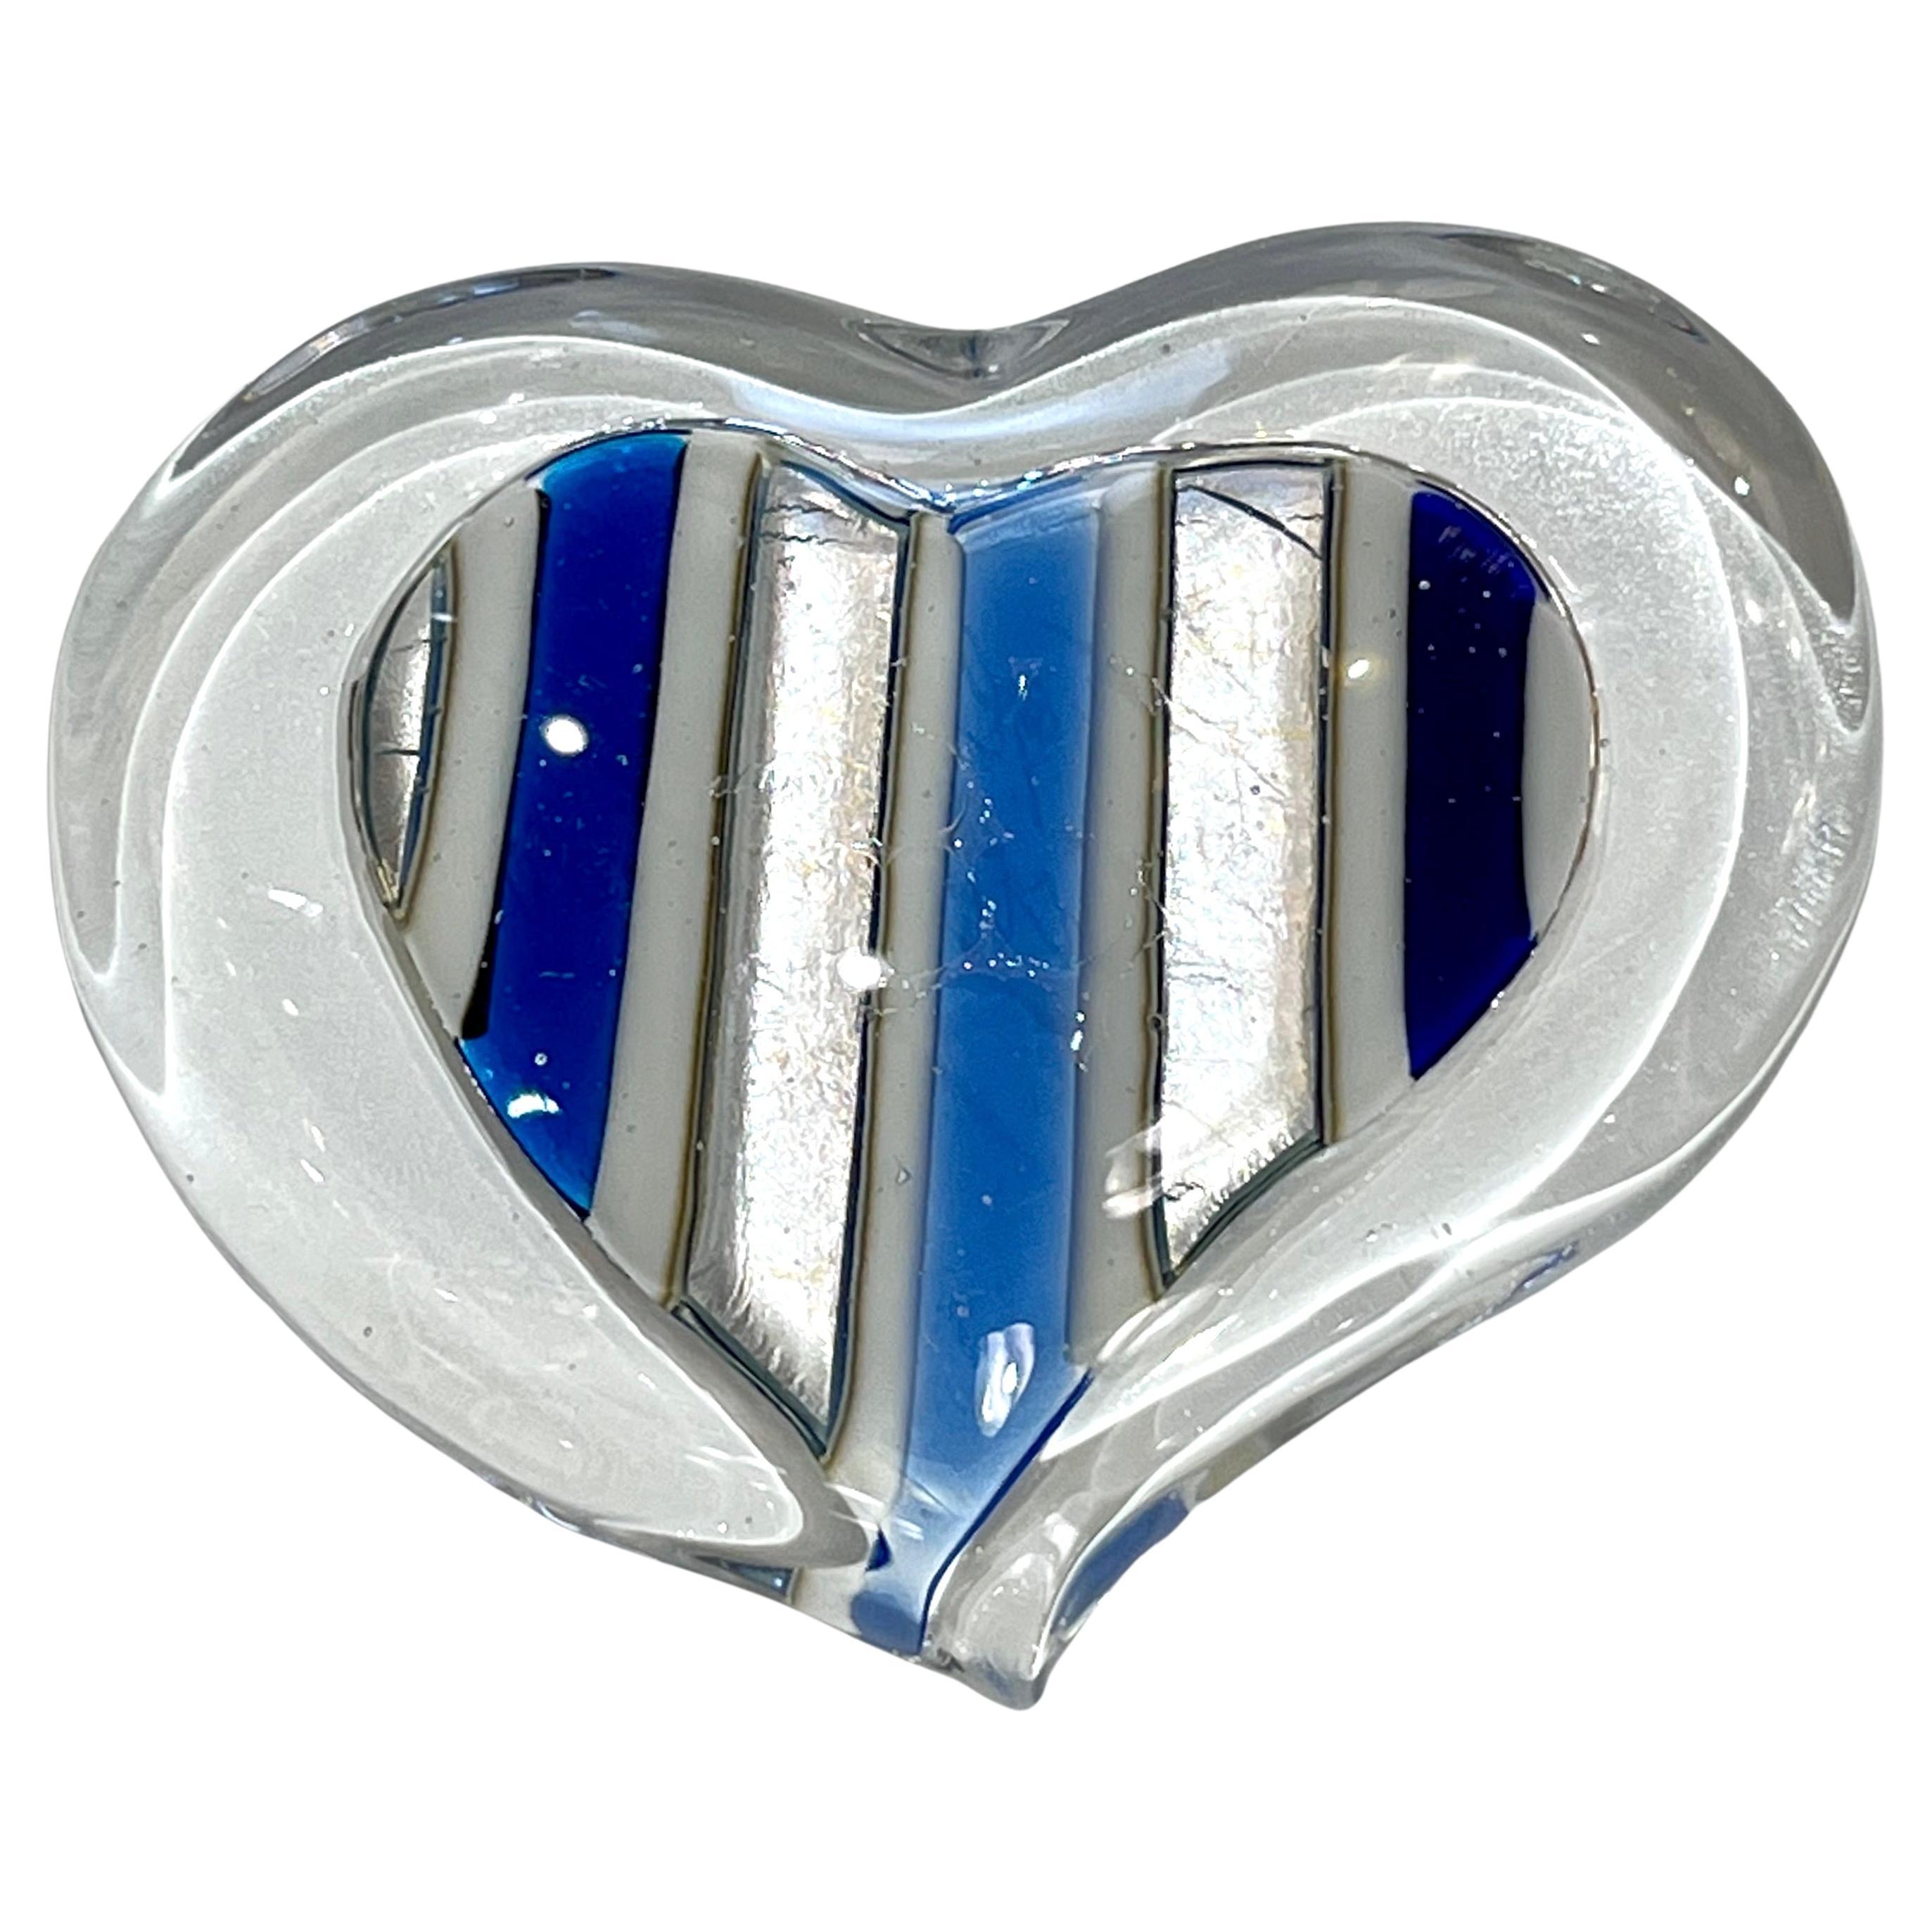 Bespoke Italian Crystal White Blue Silver Murano Glass Heart Shaped Paperweight